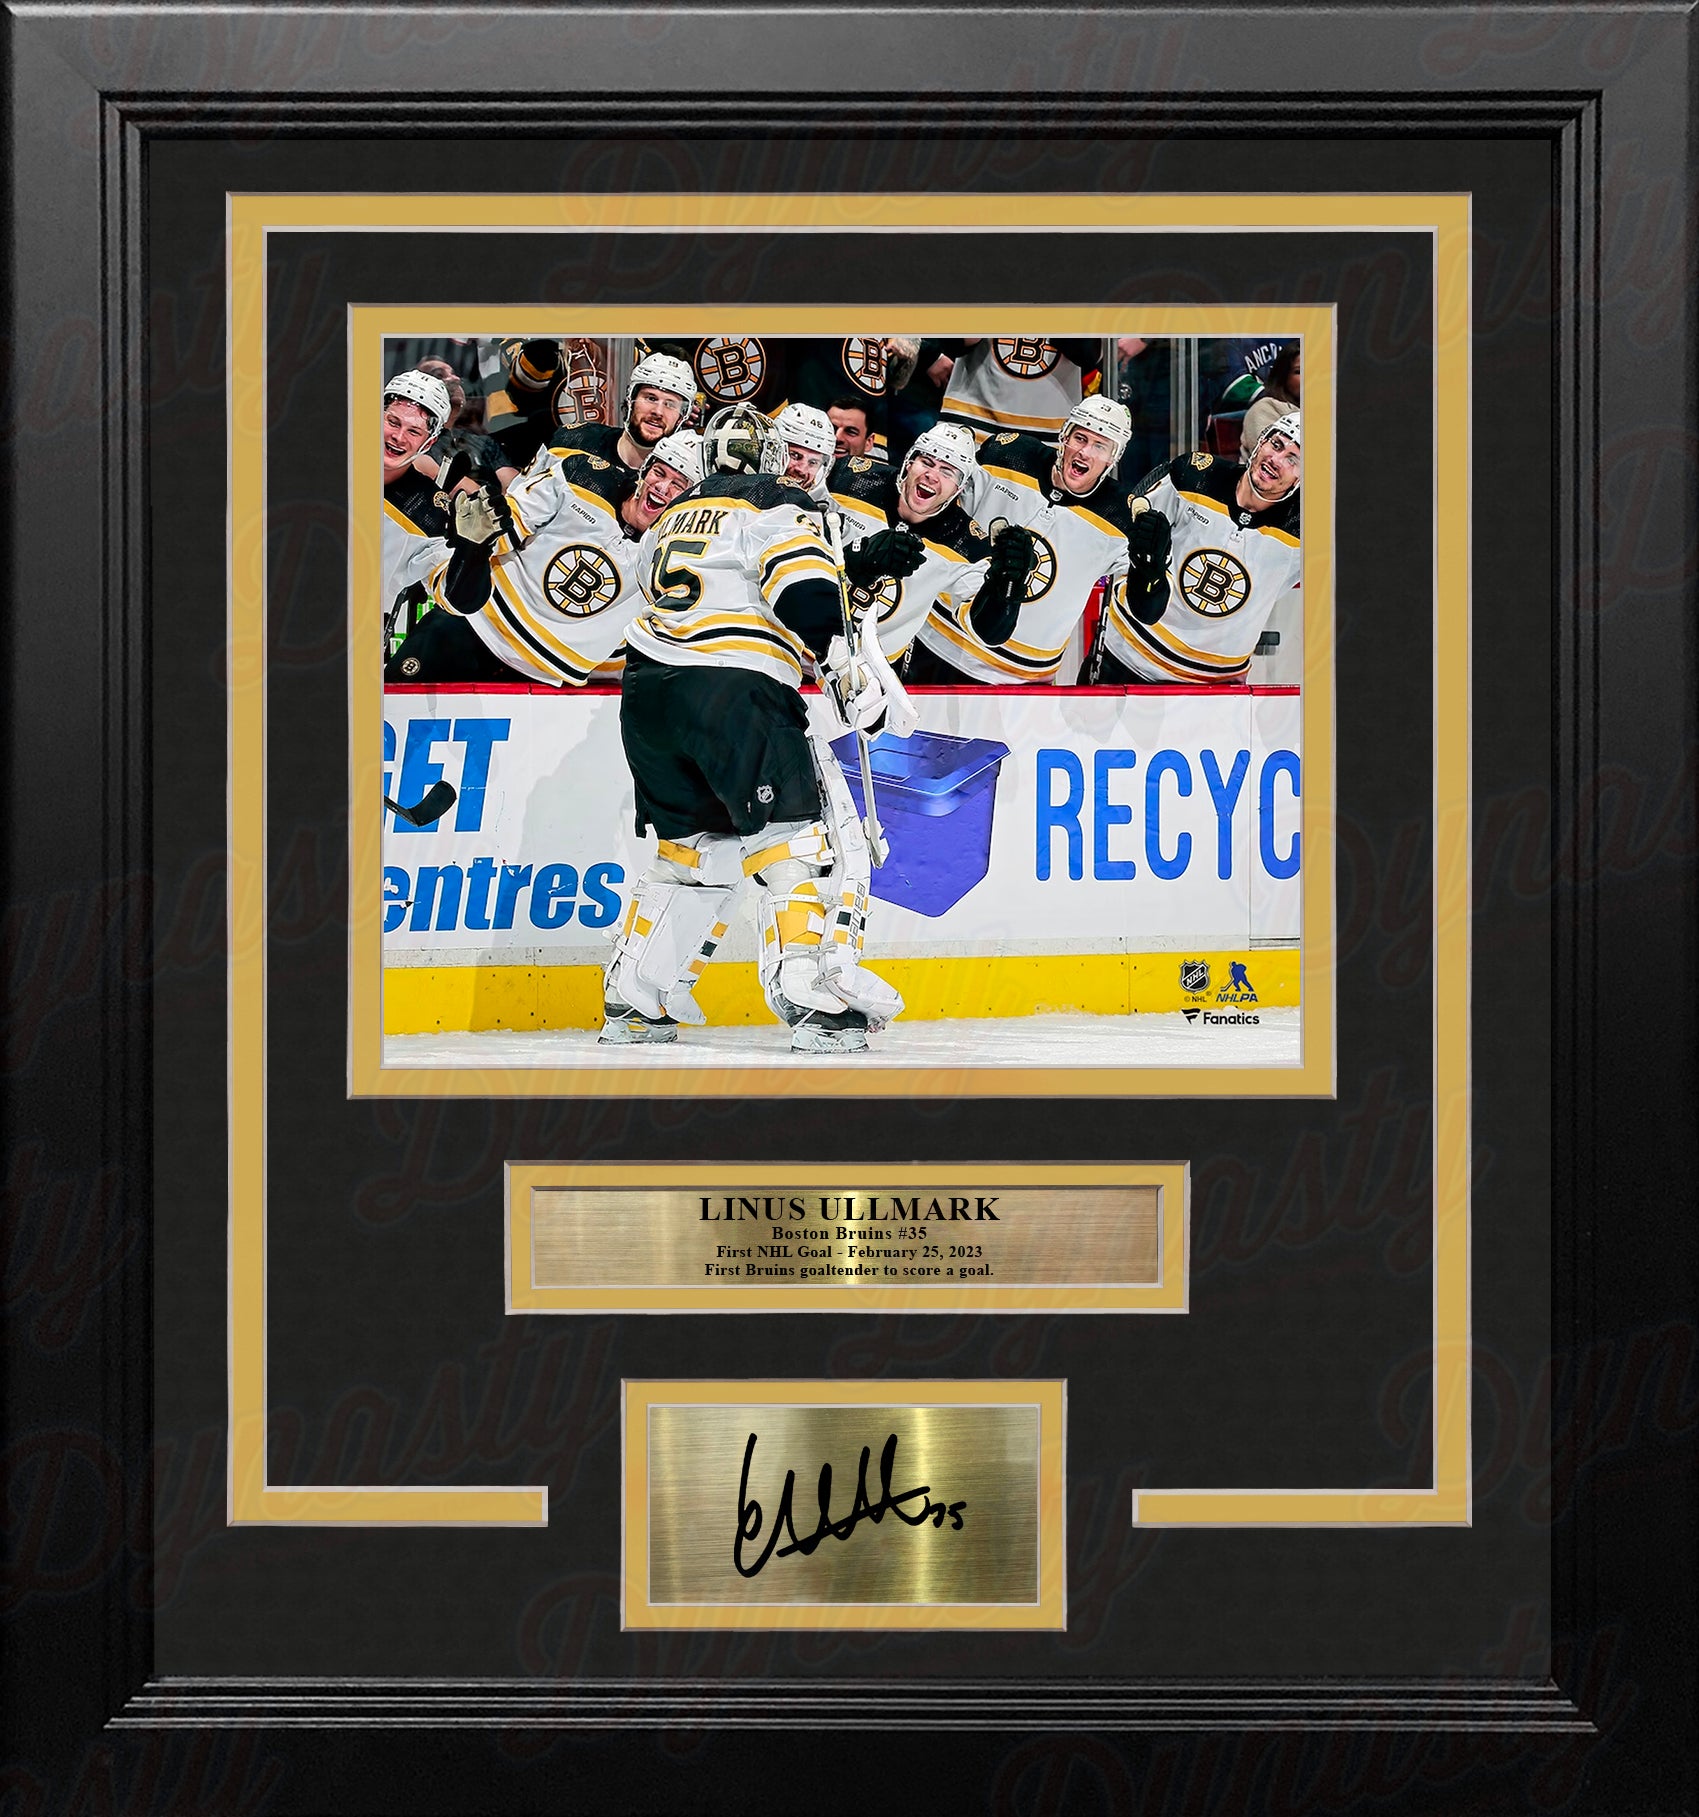 Linus Ullmark 1st NHL Goal Boston Bruins 8" x 10" Framed Hockey Photo with Engraved Autograph - Dynasty Sports & Framing 